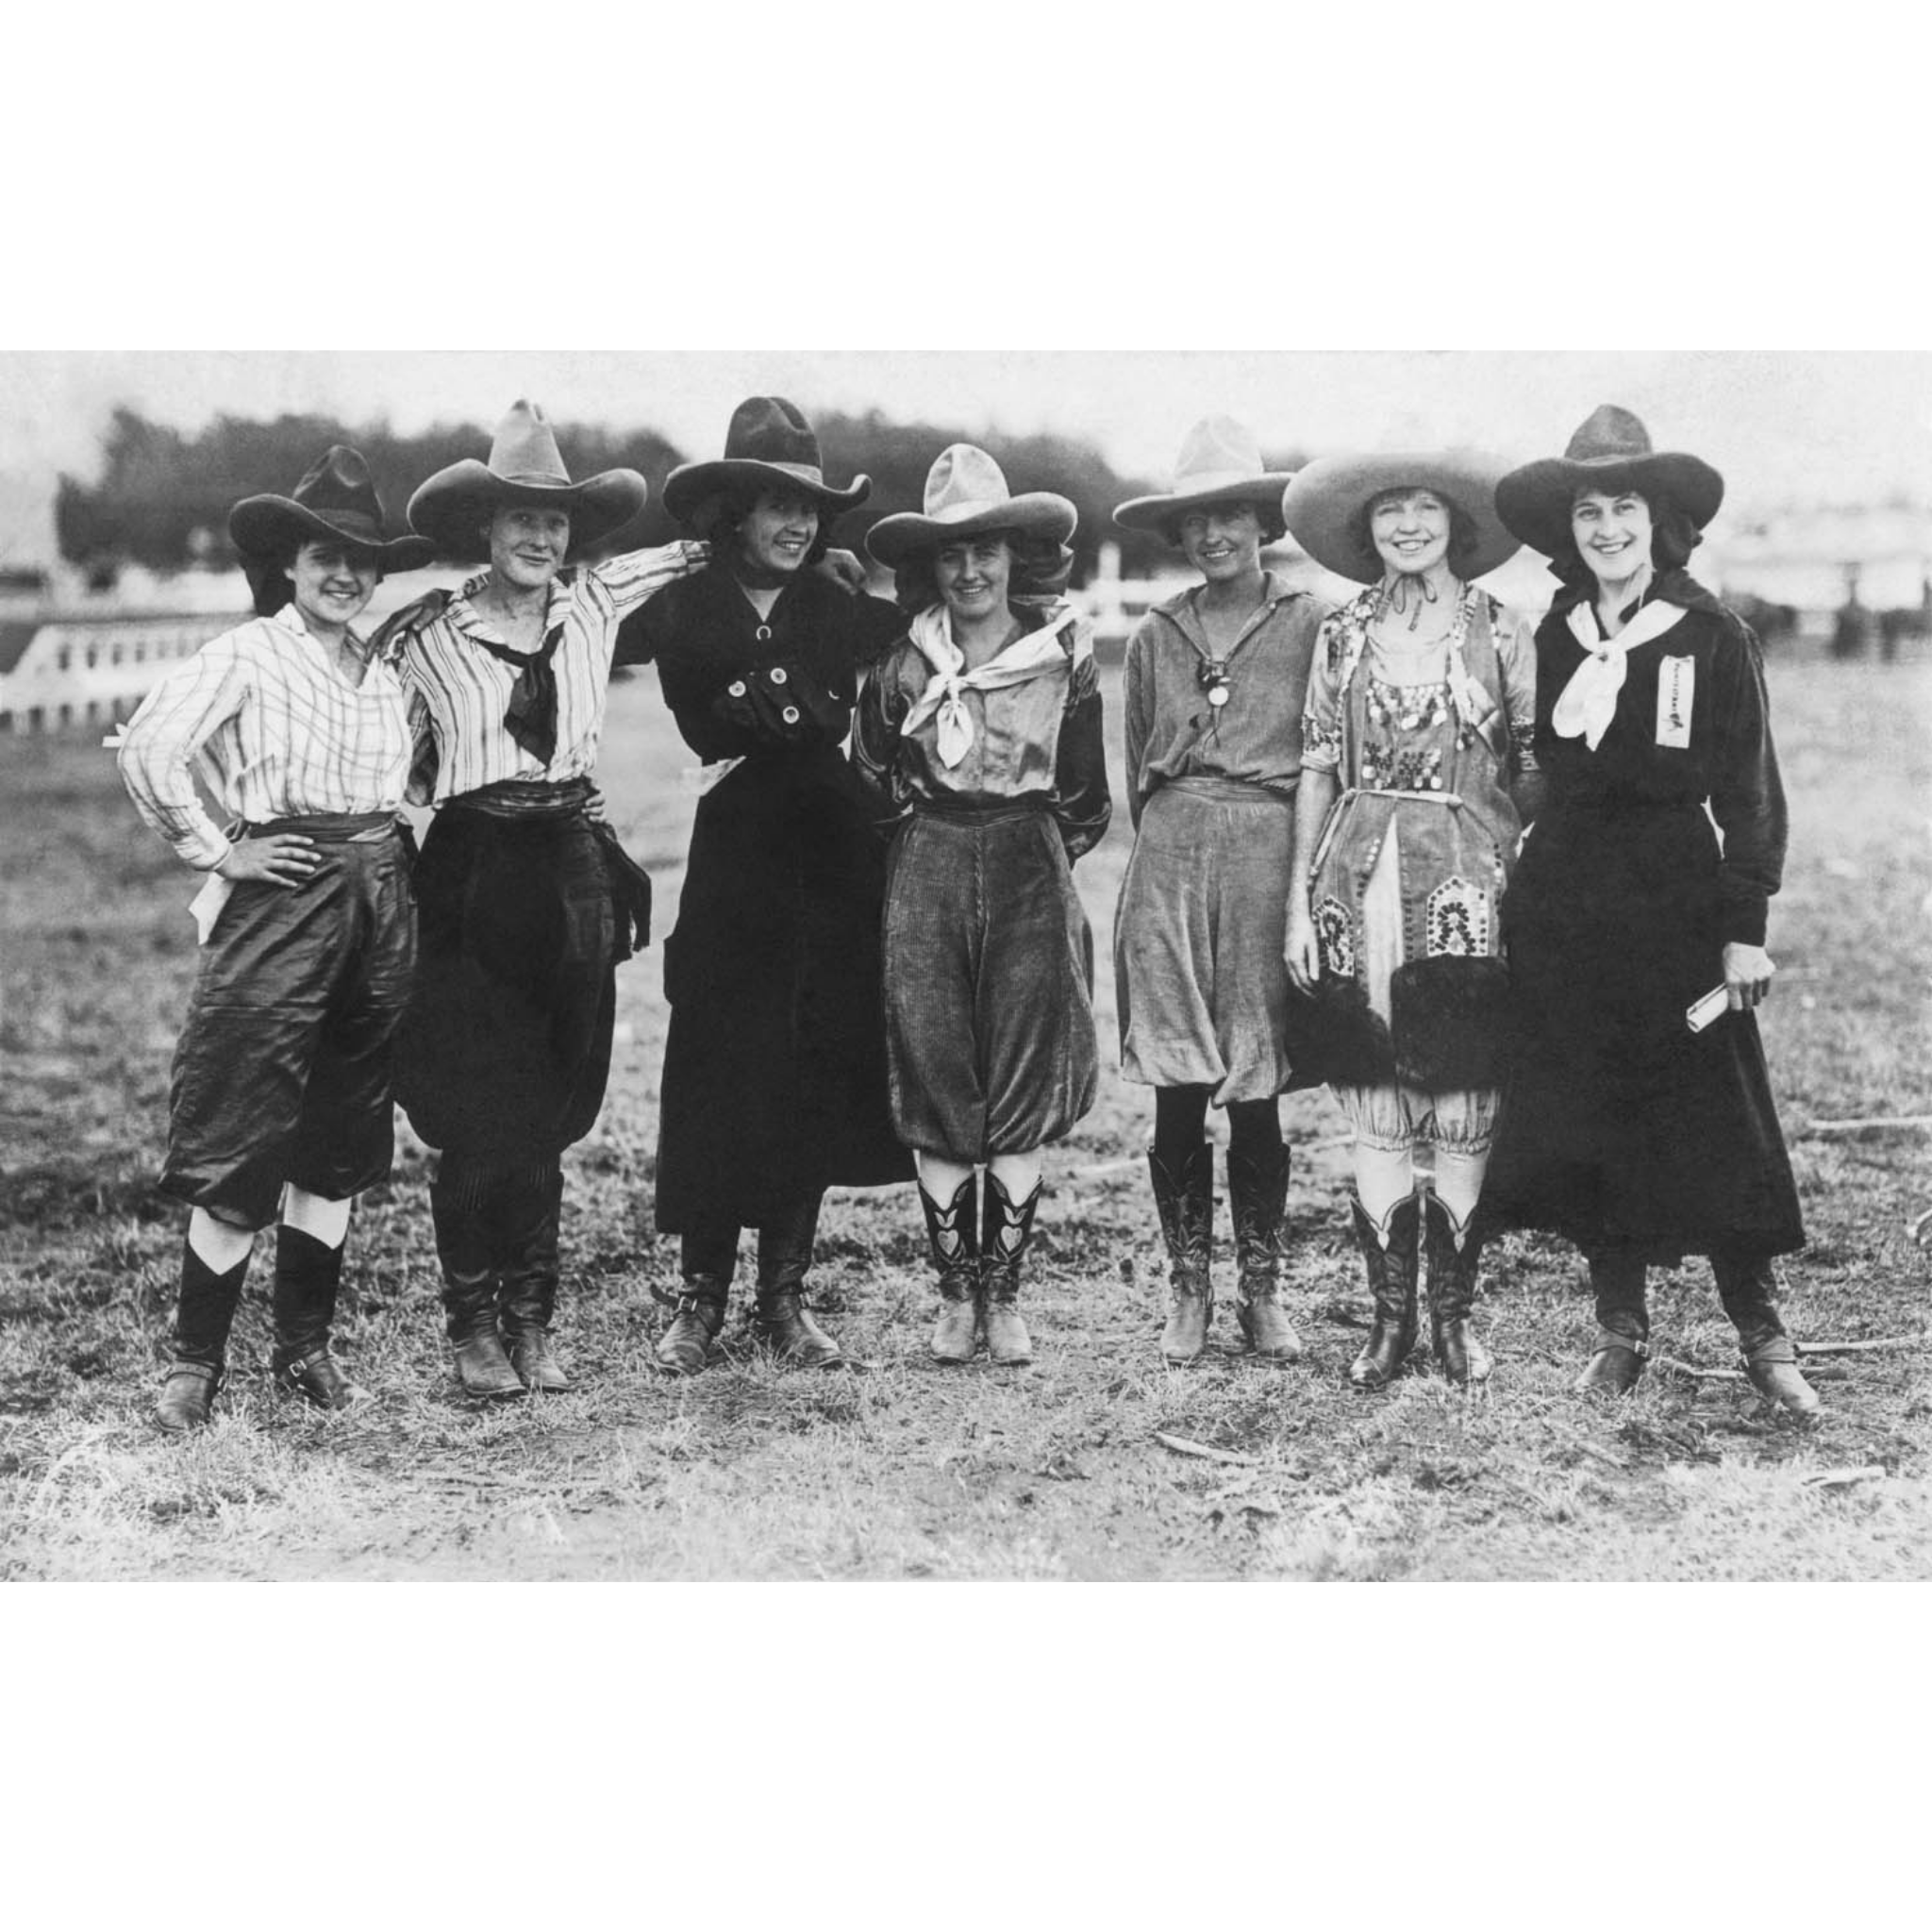 Rodeo Cowgirls 1 - Bozeman Roundup - Doubleday - ca. 1925 Photograph